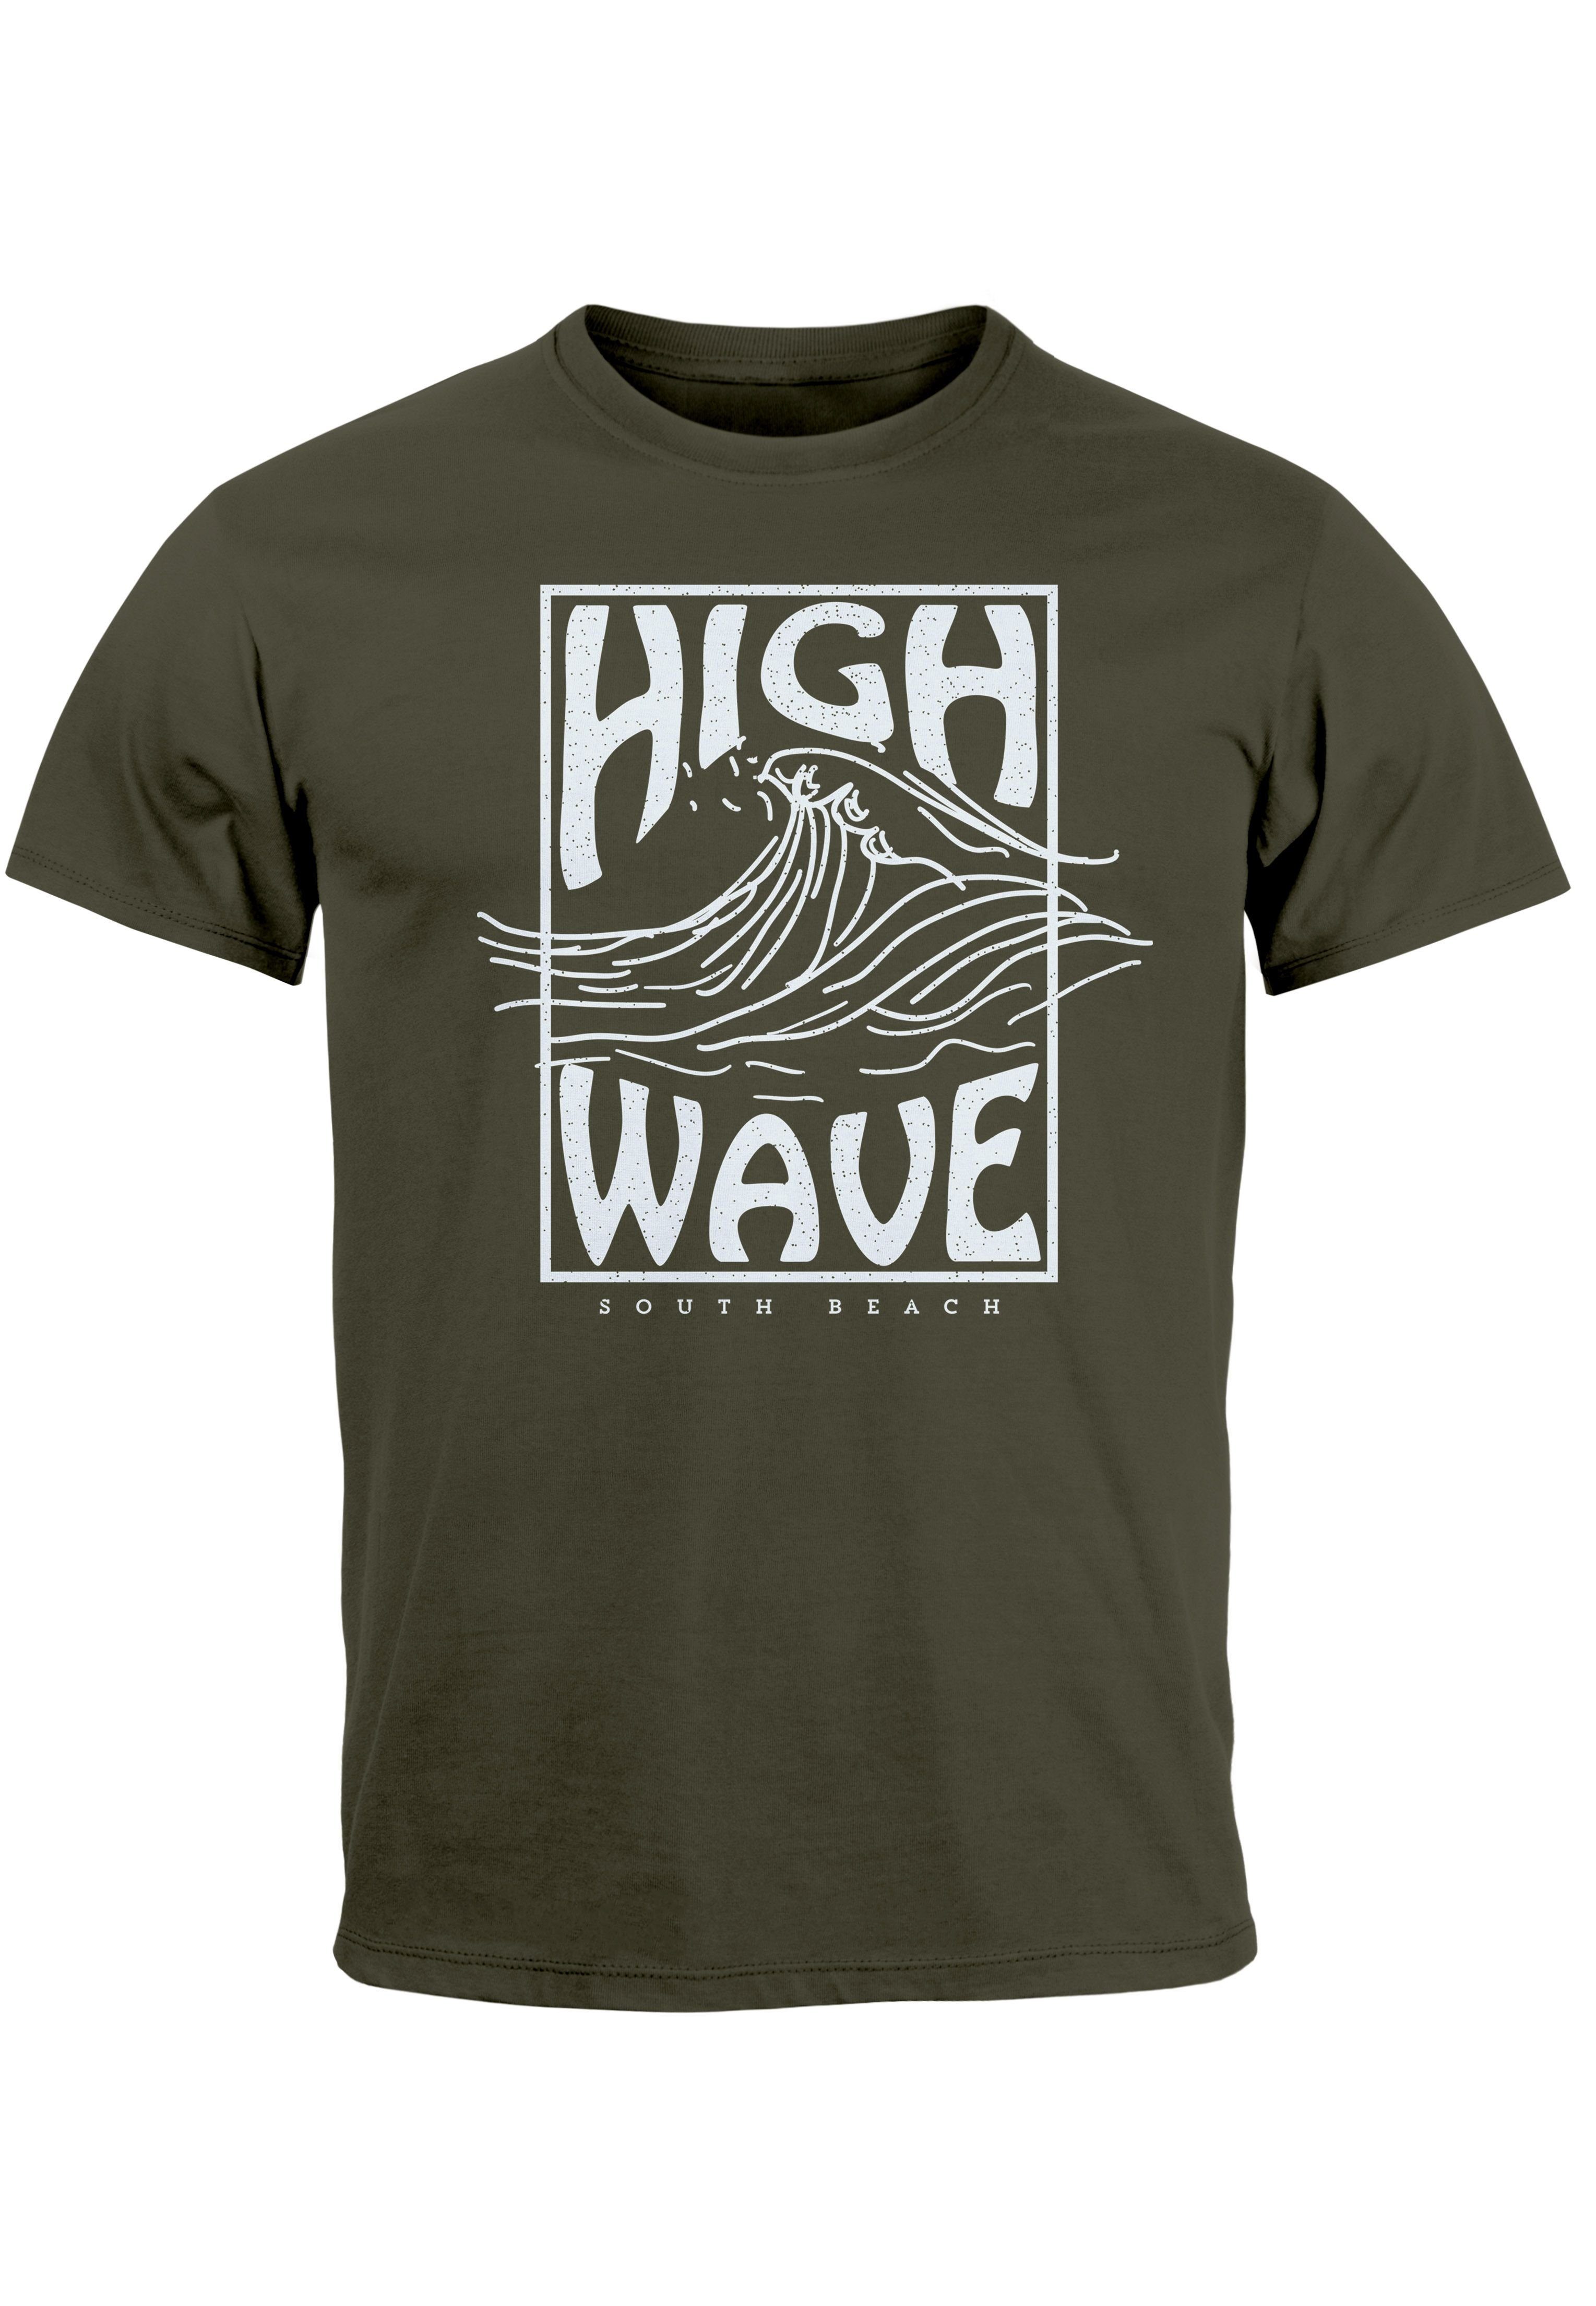 Neverless Print-Shirt Herren T-Shirt Logo Print High Wave Art Welle Line Surfing mit Schrift Aufdruck army